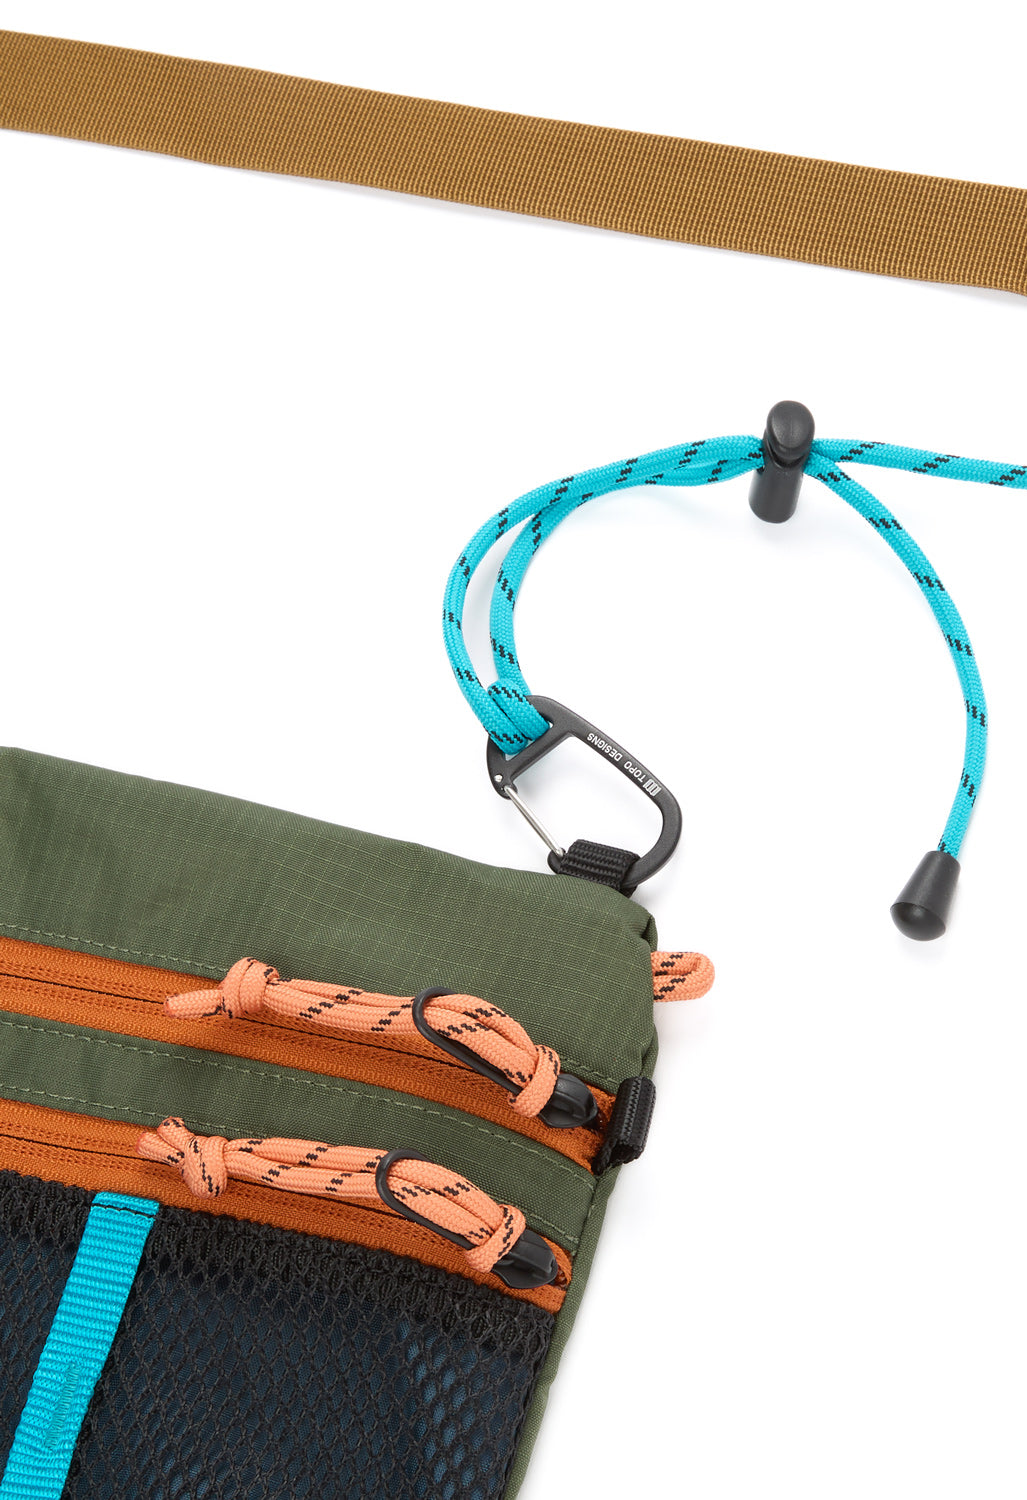 Topo Designs Mountain Accessory Shoulder Bag - Olive / Pond Blue